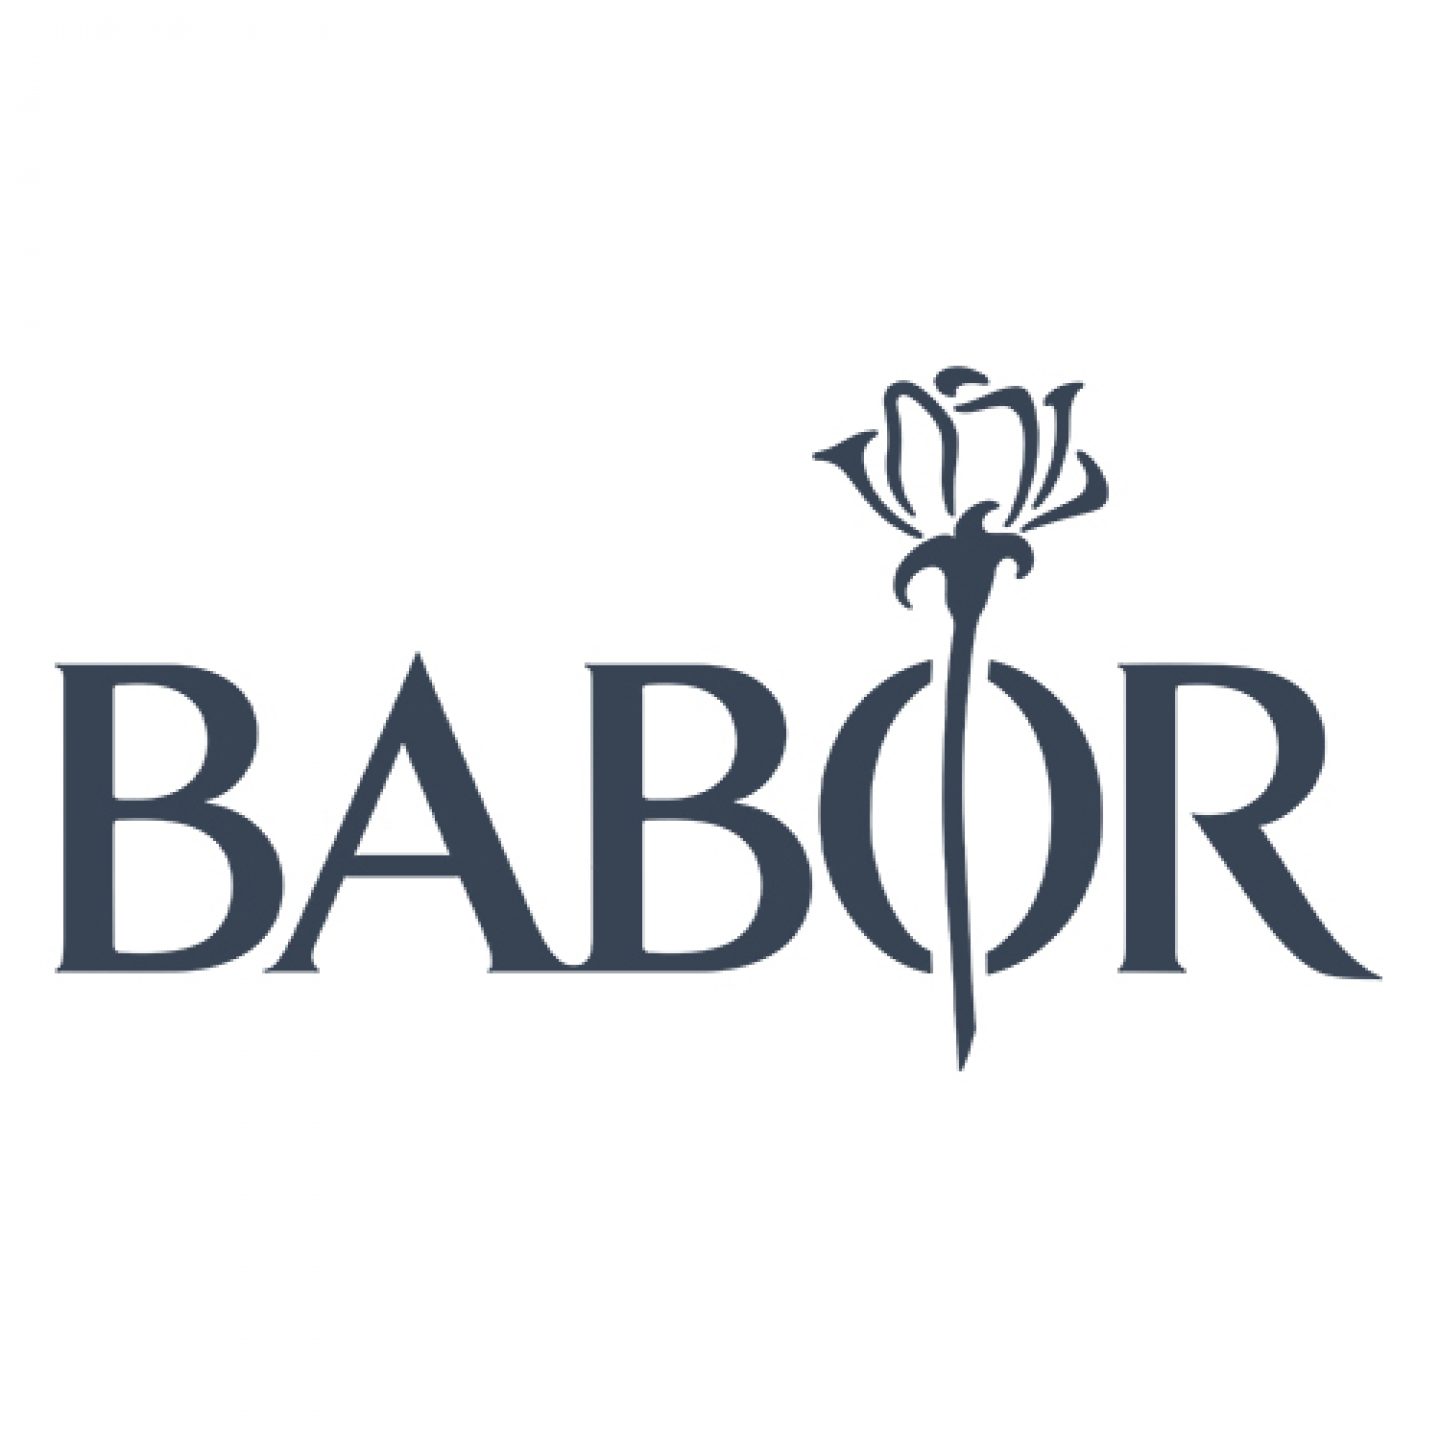 EEZ-Apotheke Marken Logo Babor